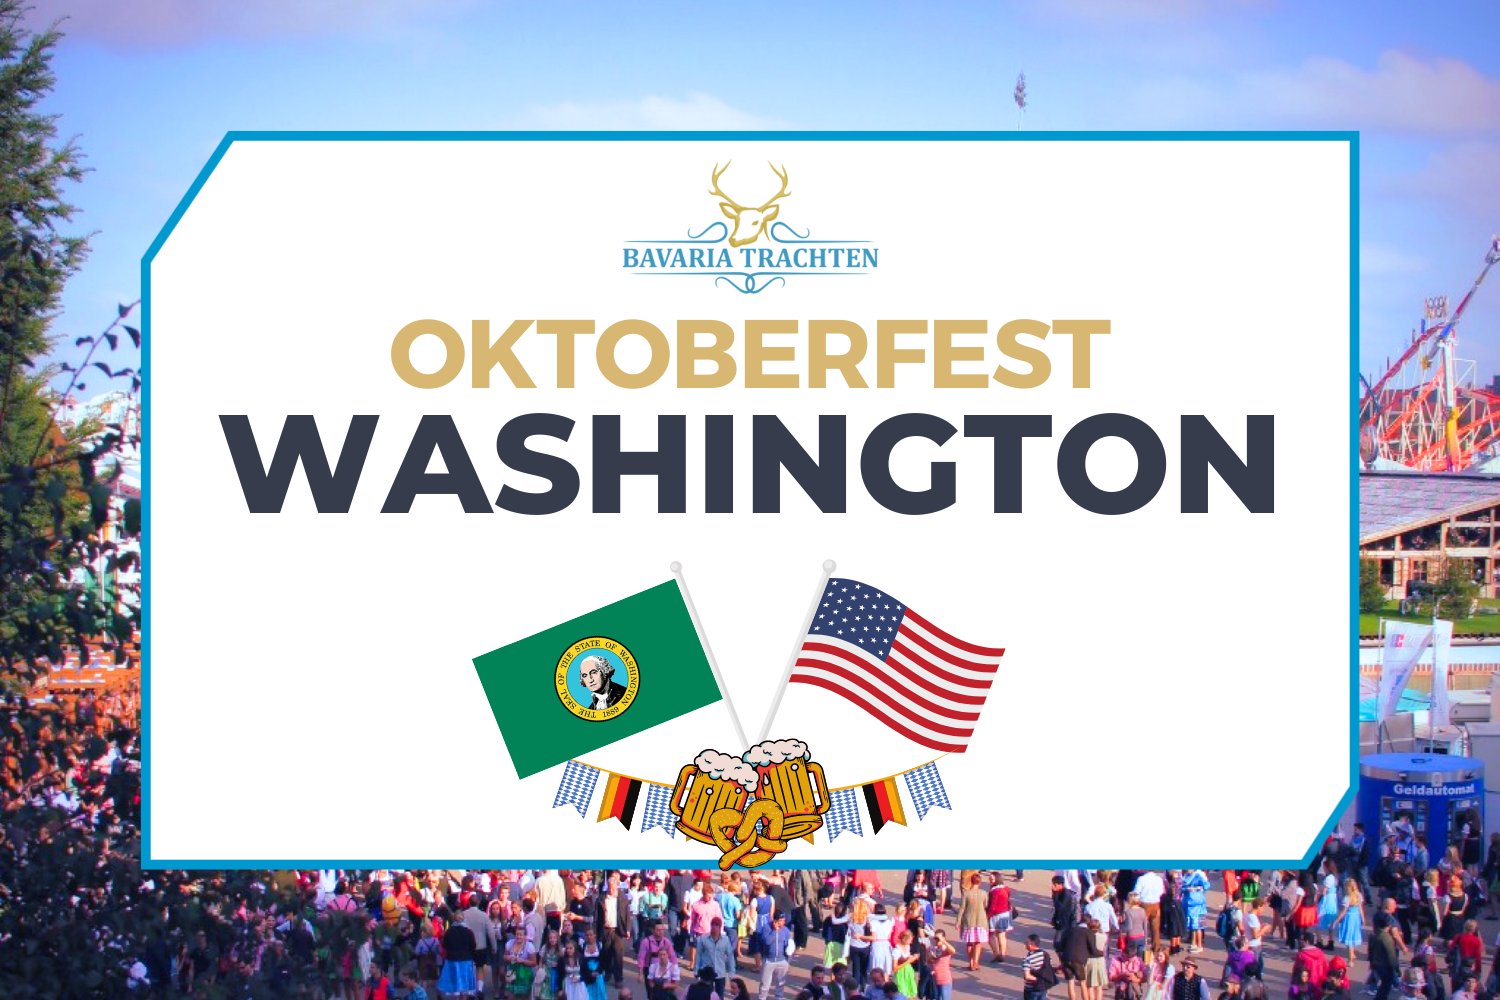 Oktoberfest Washington, USA